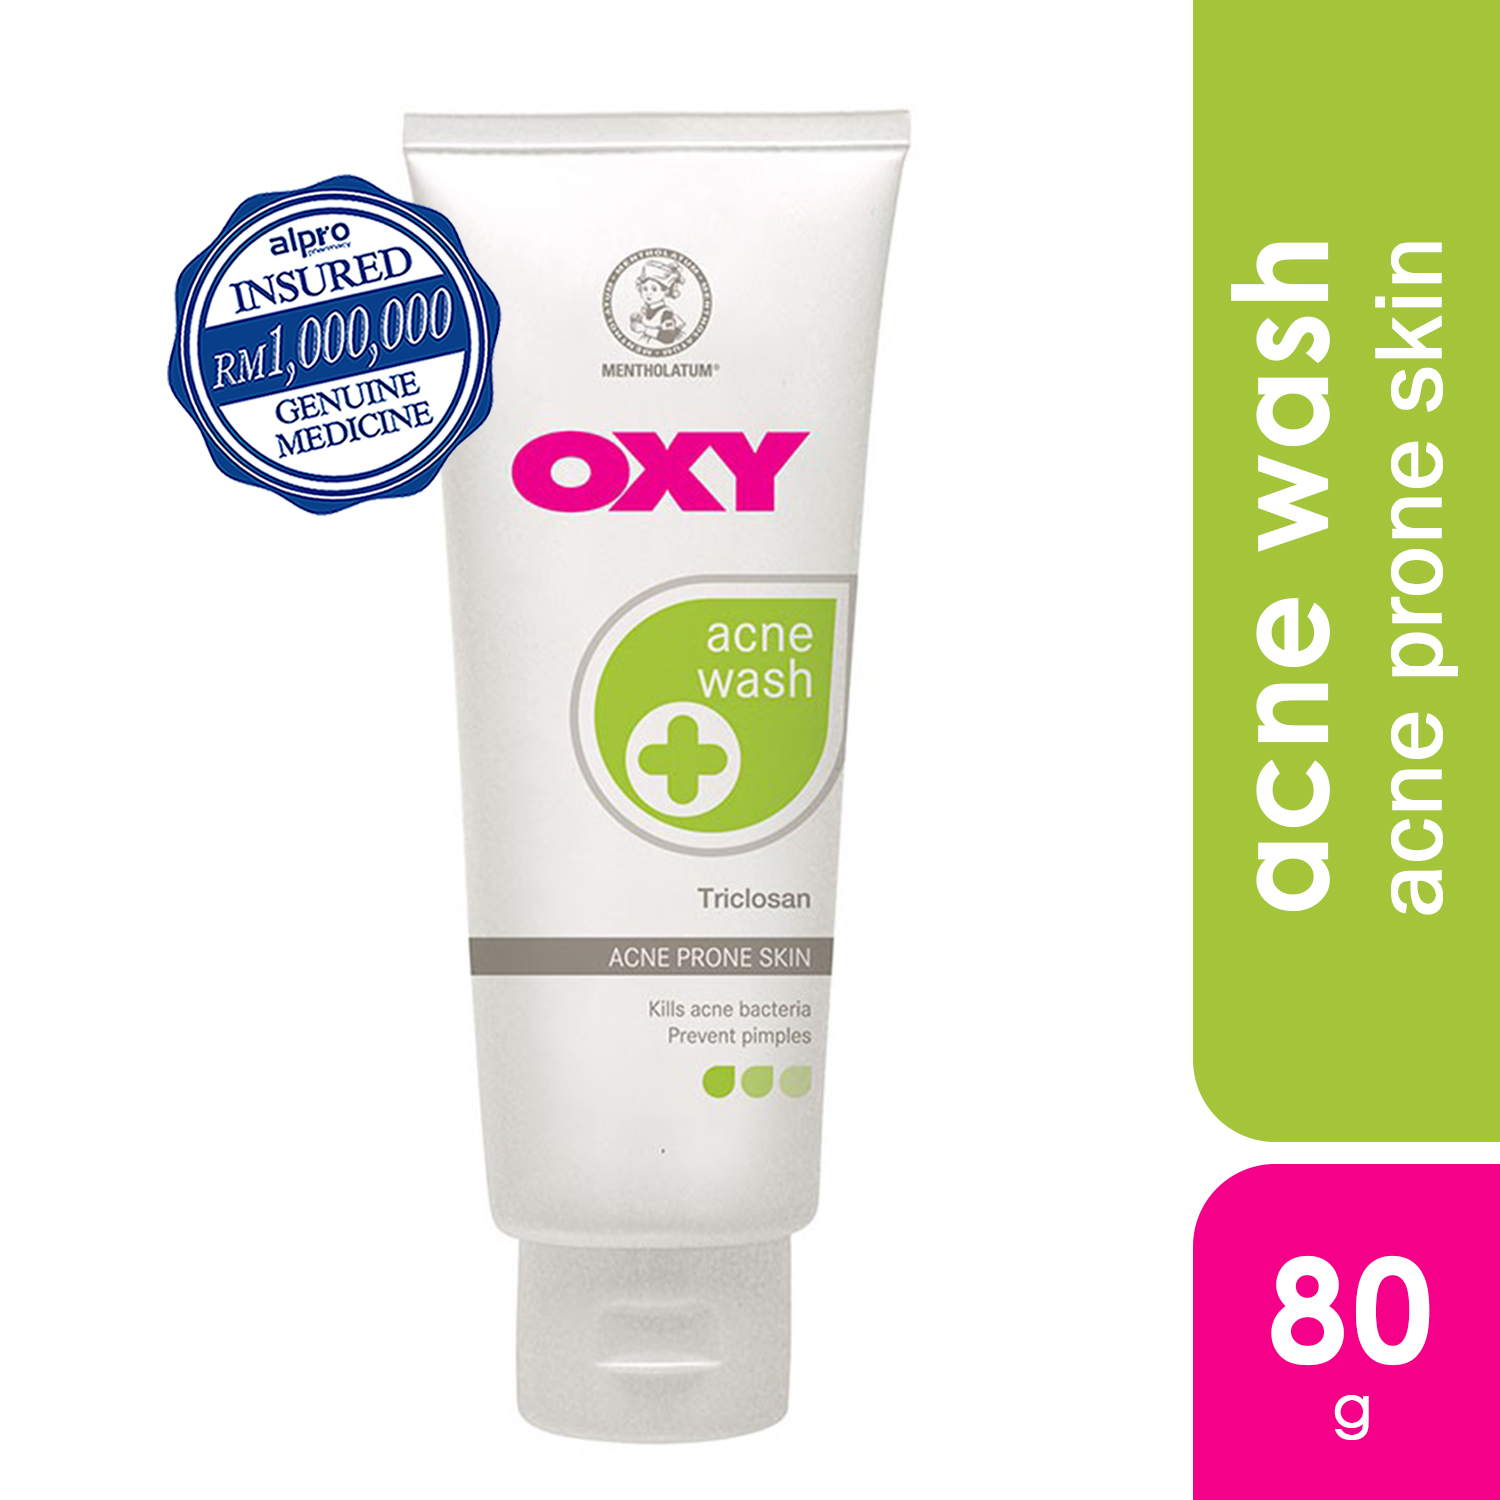 Oxy Acne Wash 80g - Alpro Pharmacy